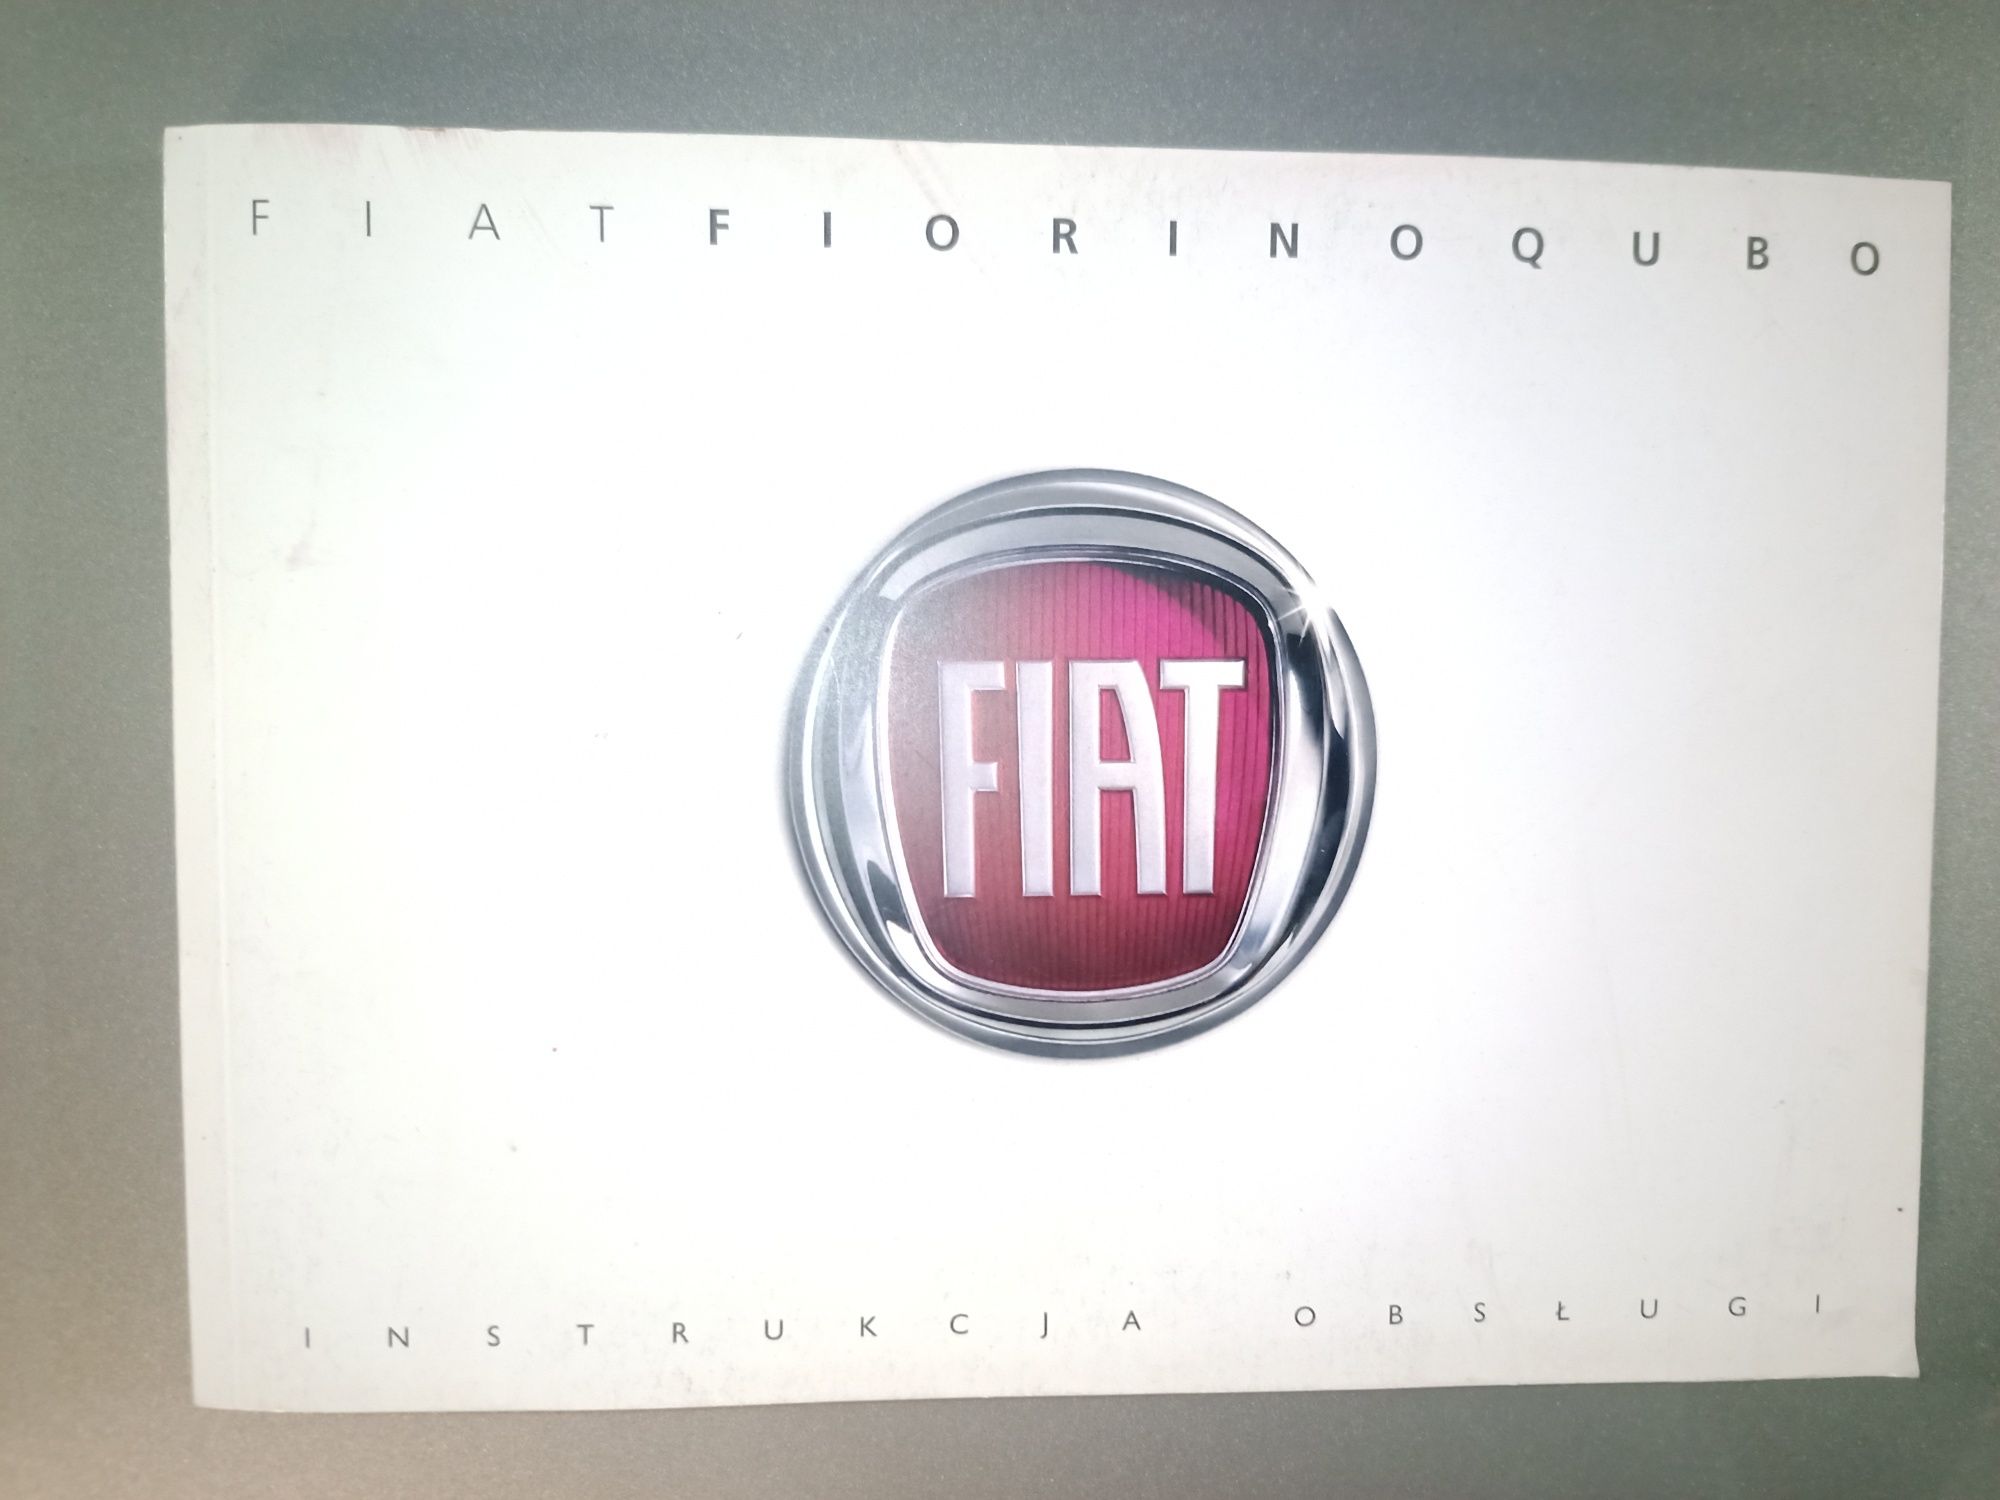 Instrukcja obsługi Fiat Fiorino qubo